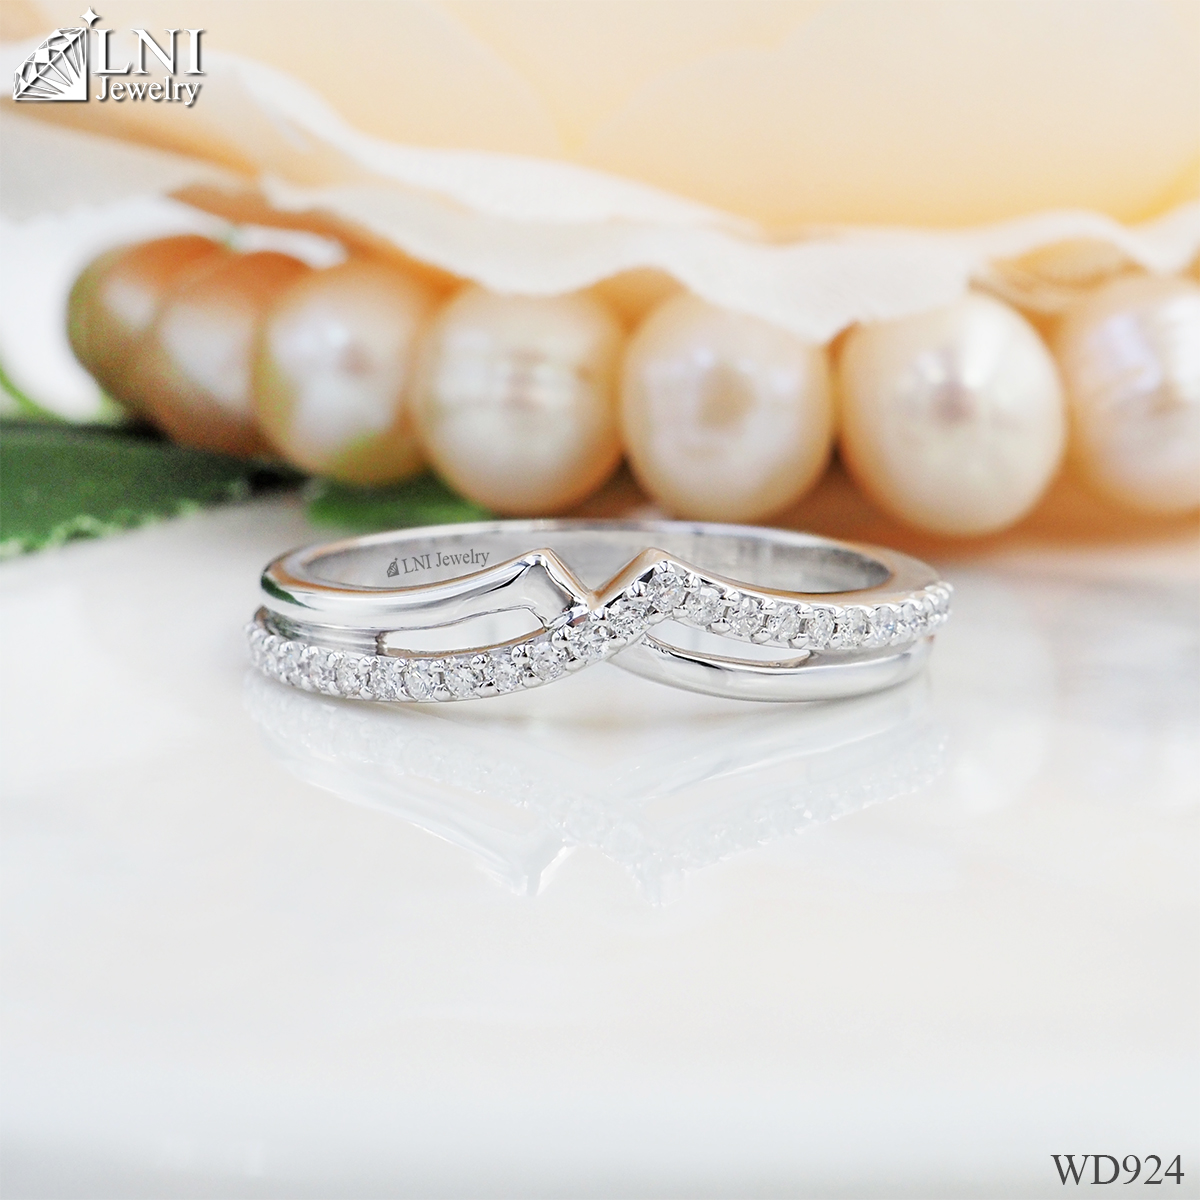 WD924 Band Diamond Ring